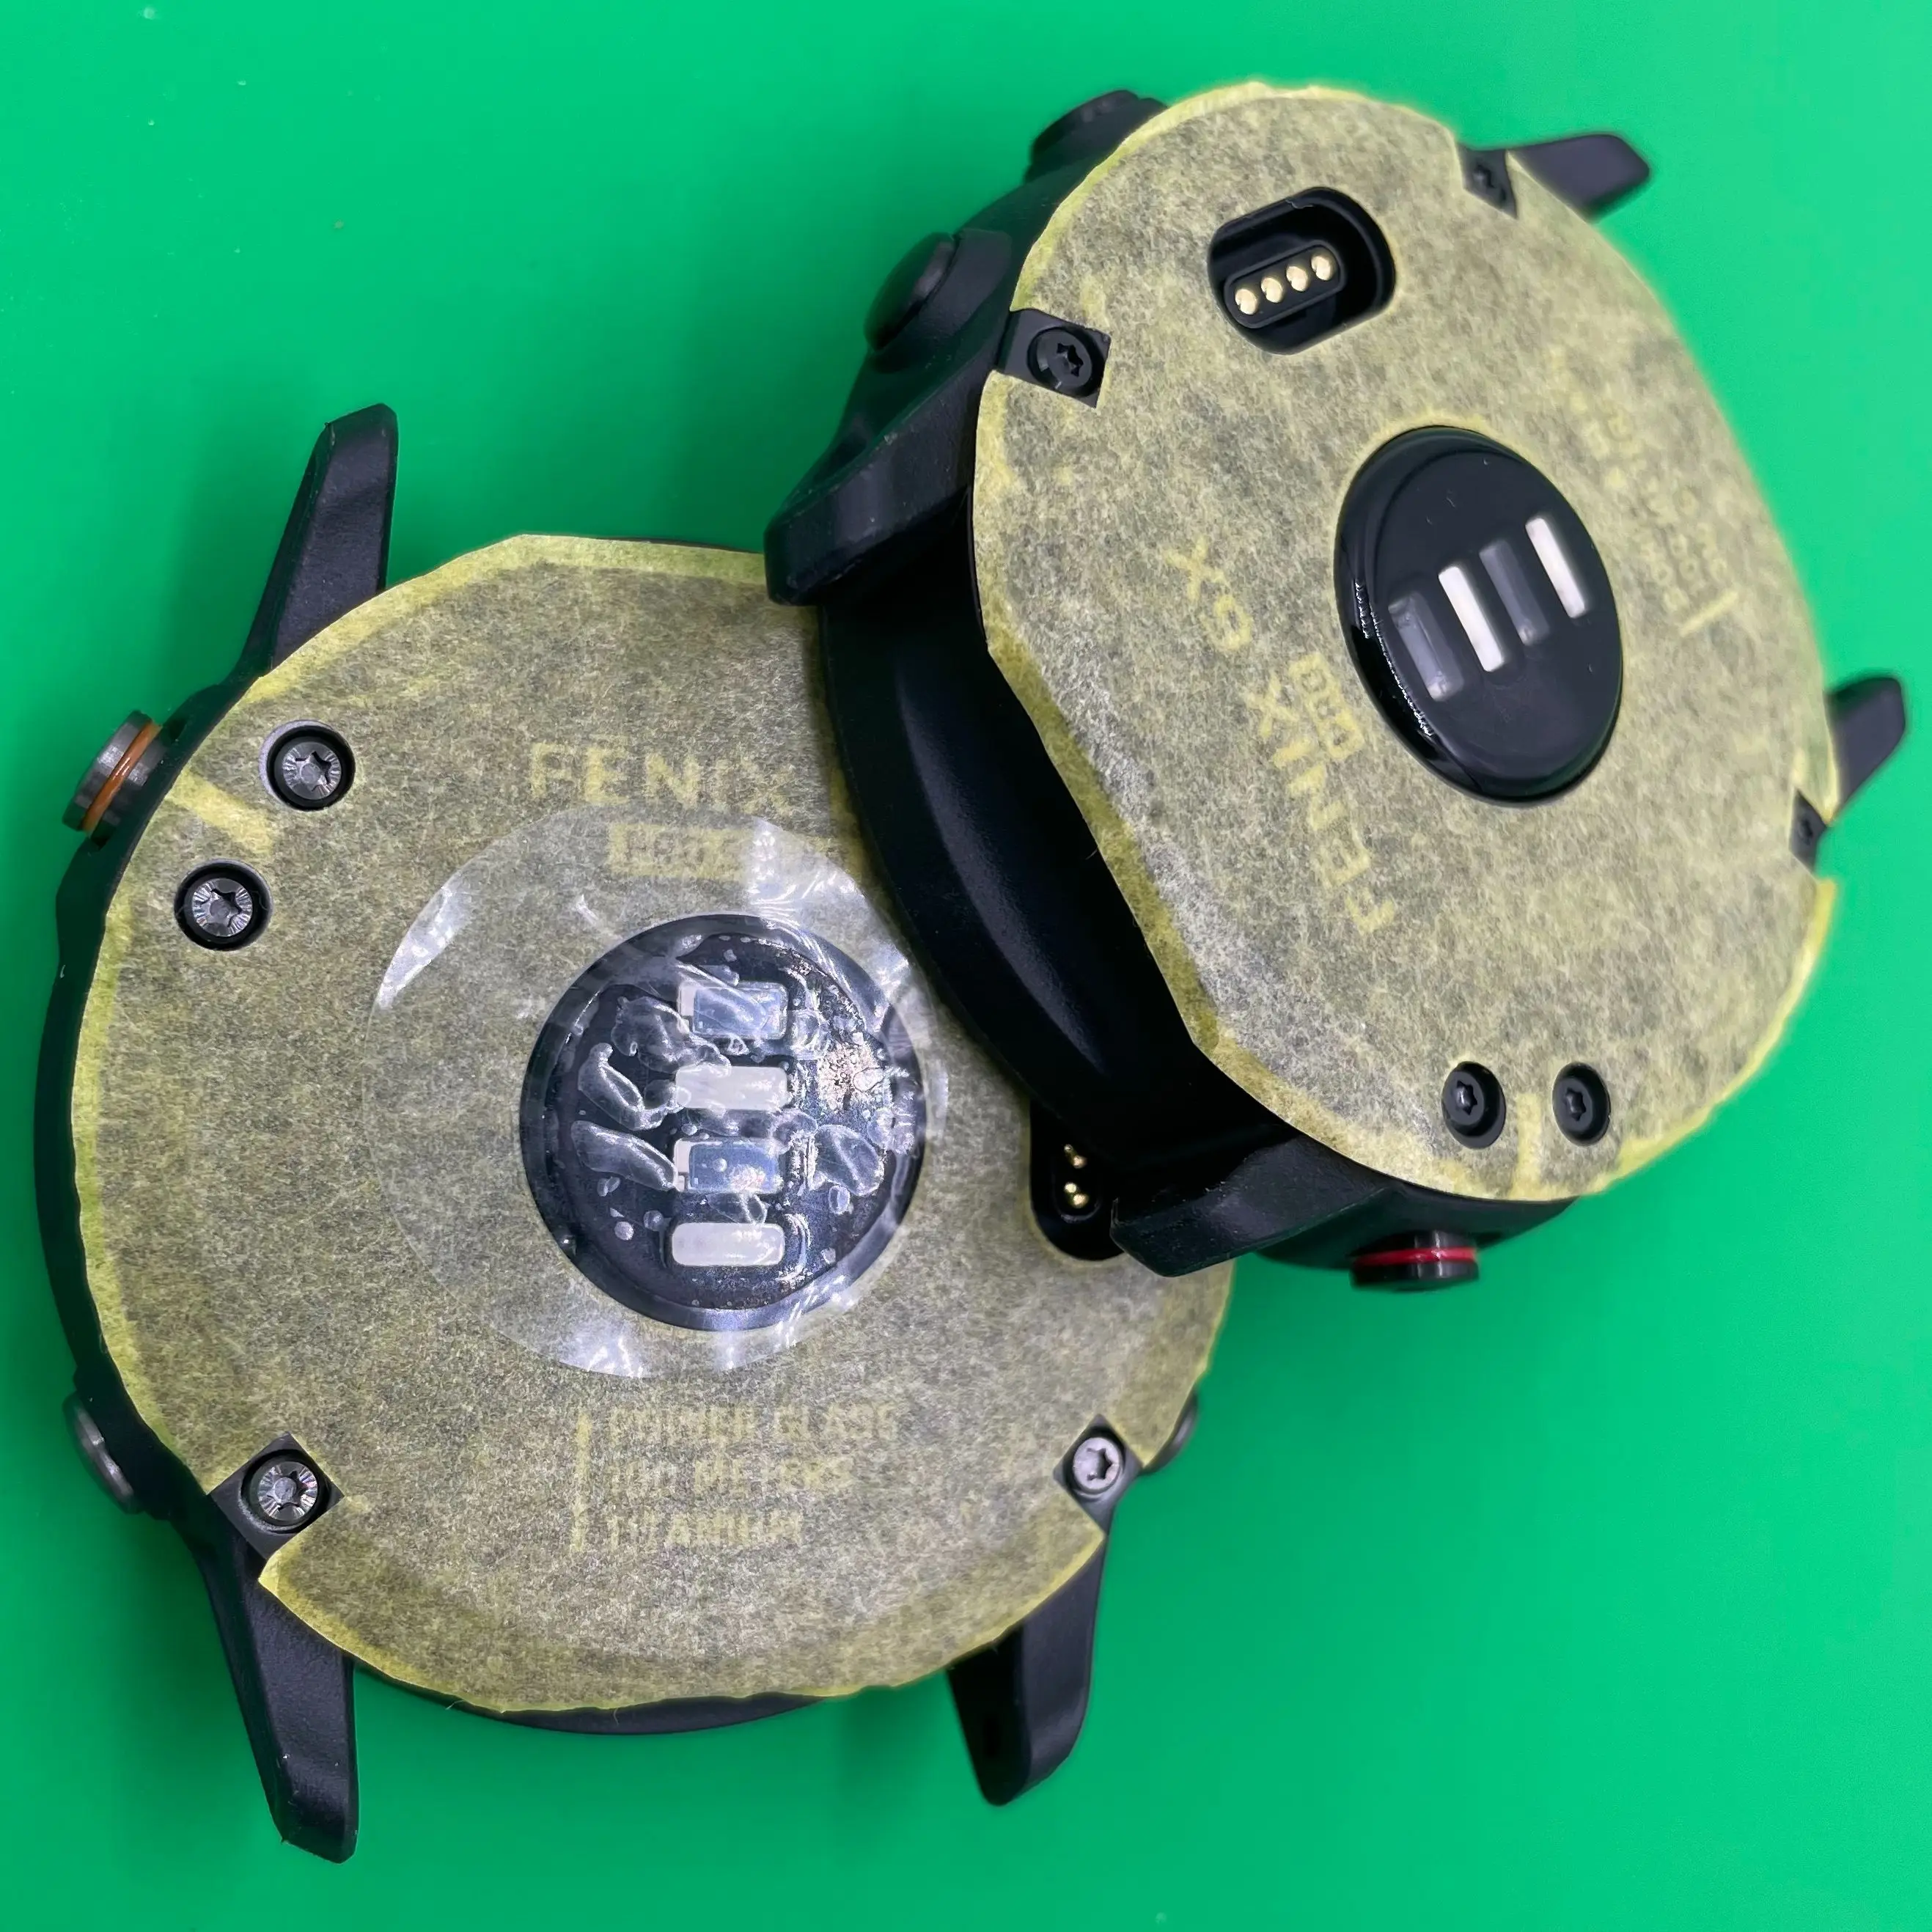 original-back-cover-charging-base-for-garmin-fenix-6x-profenix-6x-pro-solar-multisport-gps-watche-back-case-repair-replacemen